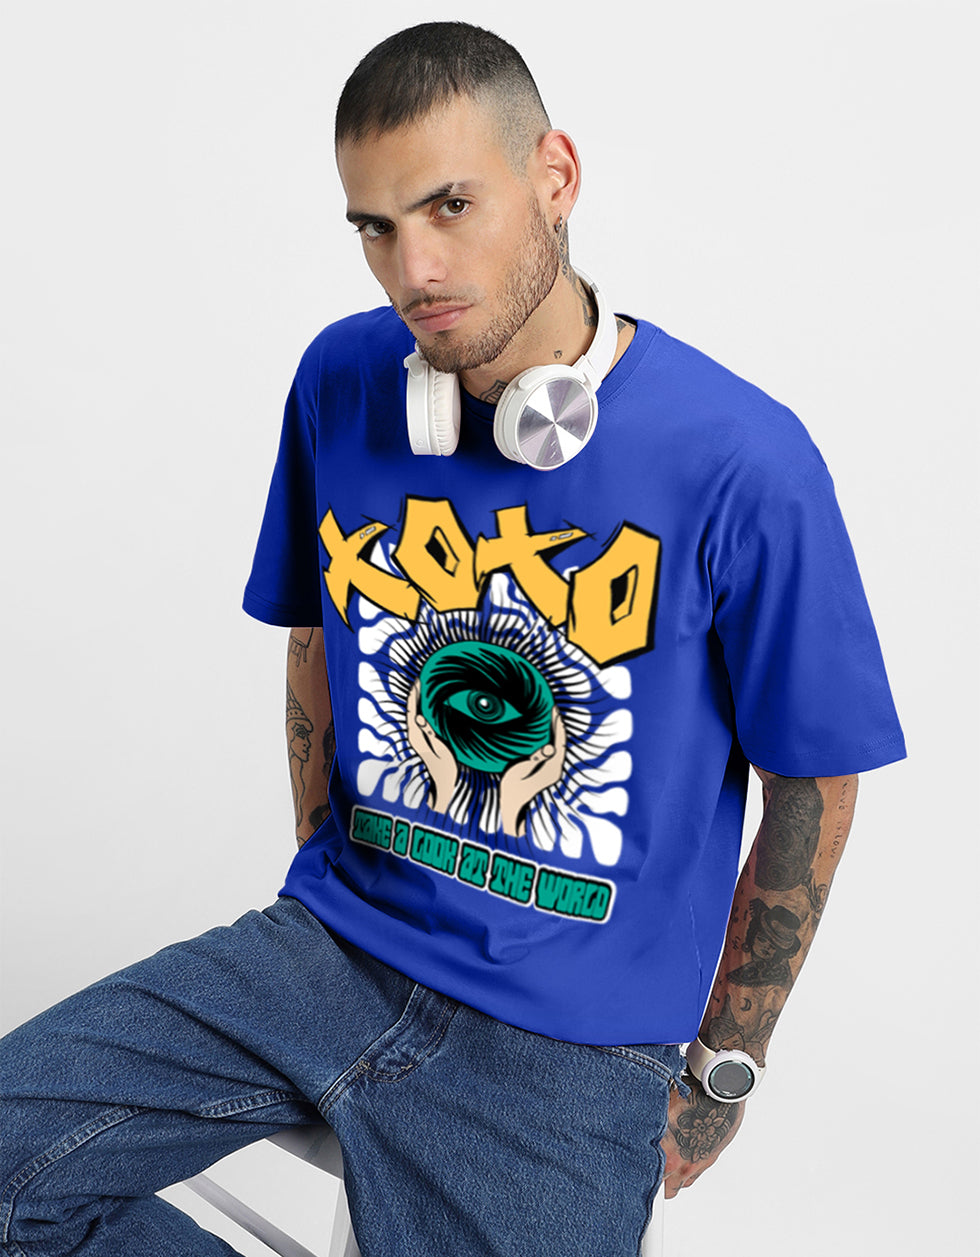 XOXO Printed Blue Men's Front Typographic Printed Tshirt